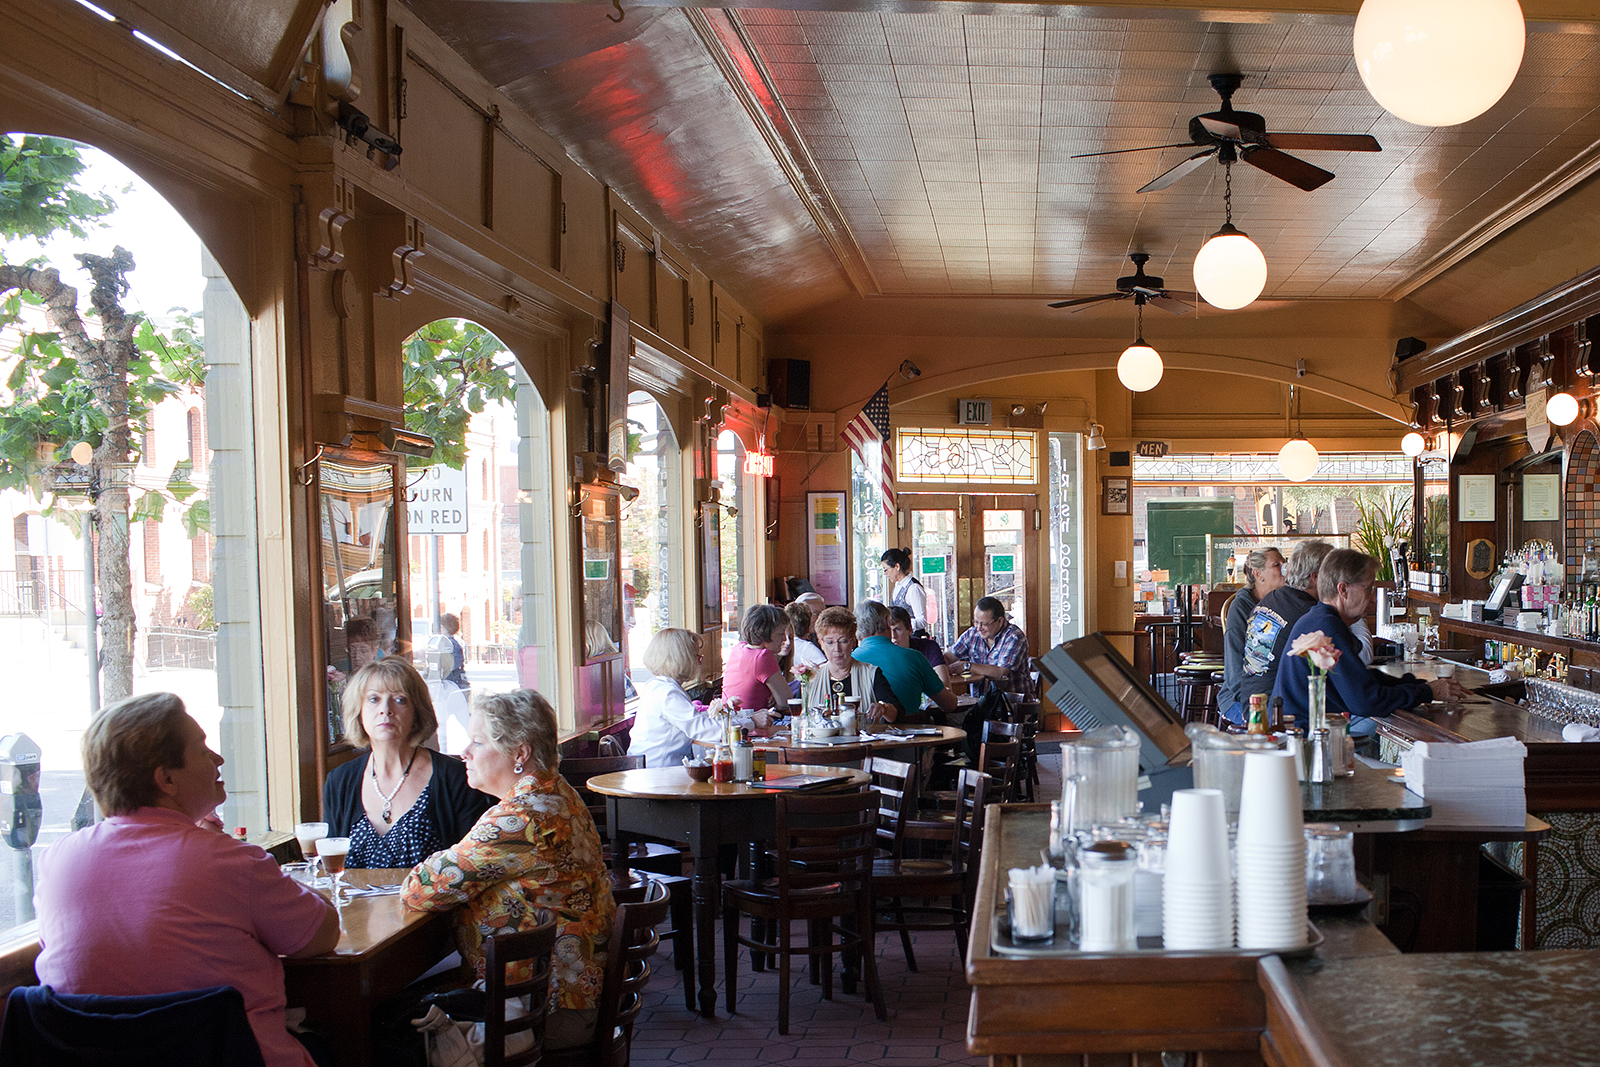 Buena Vista Cafe Restaurant Info and Reservations